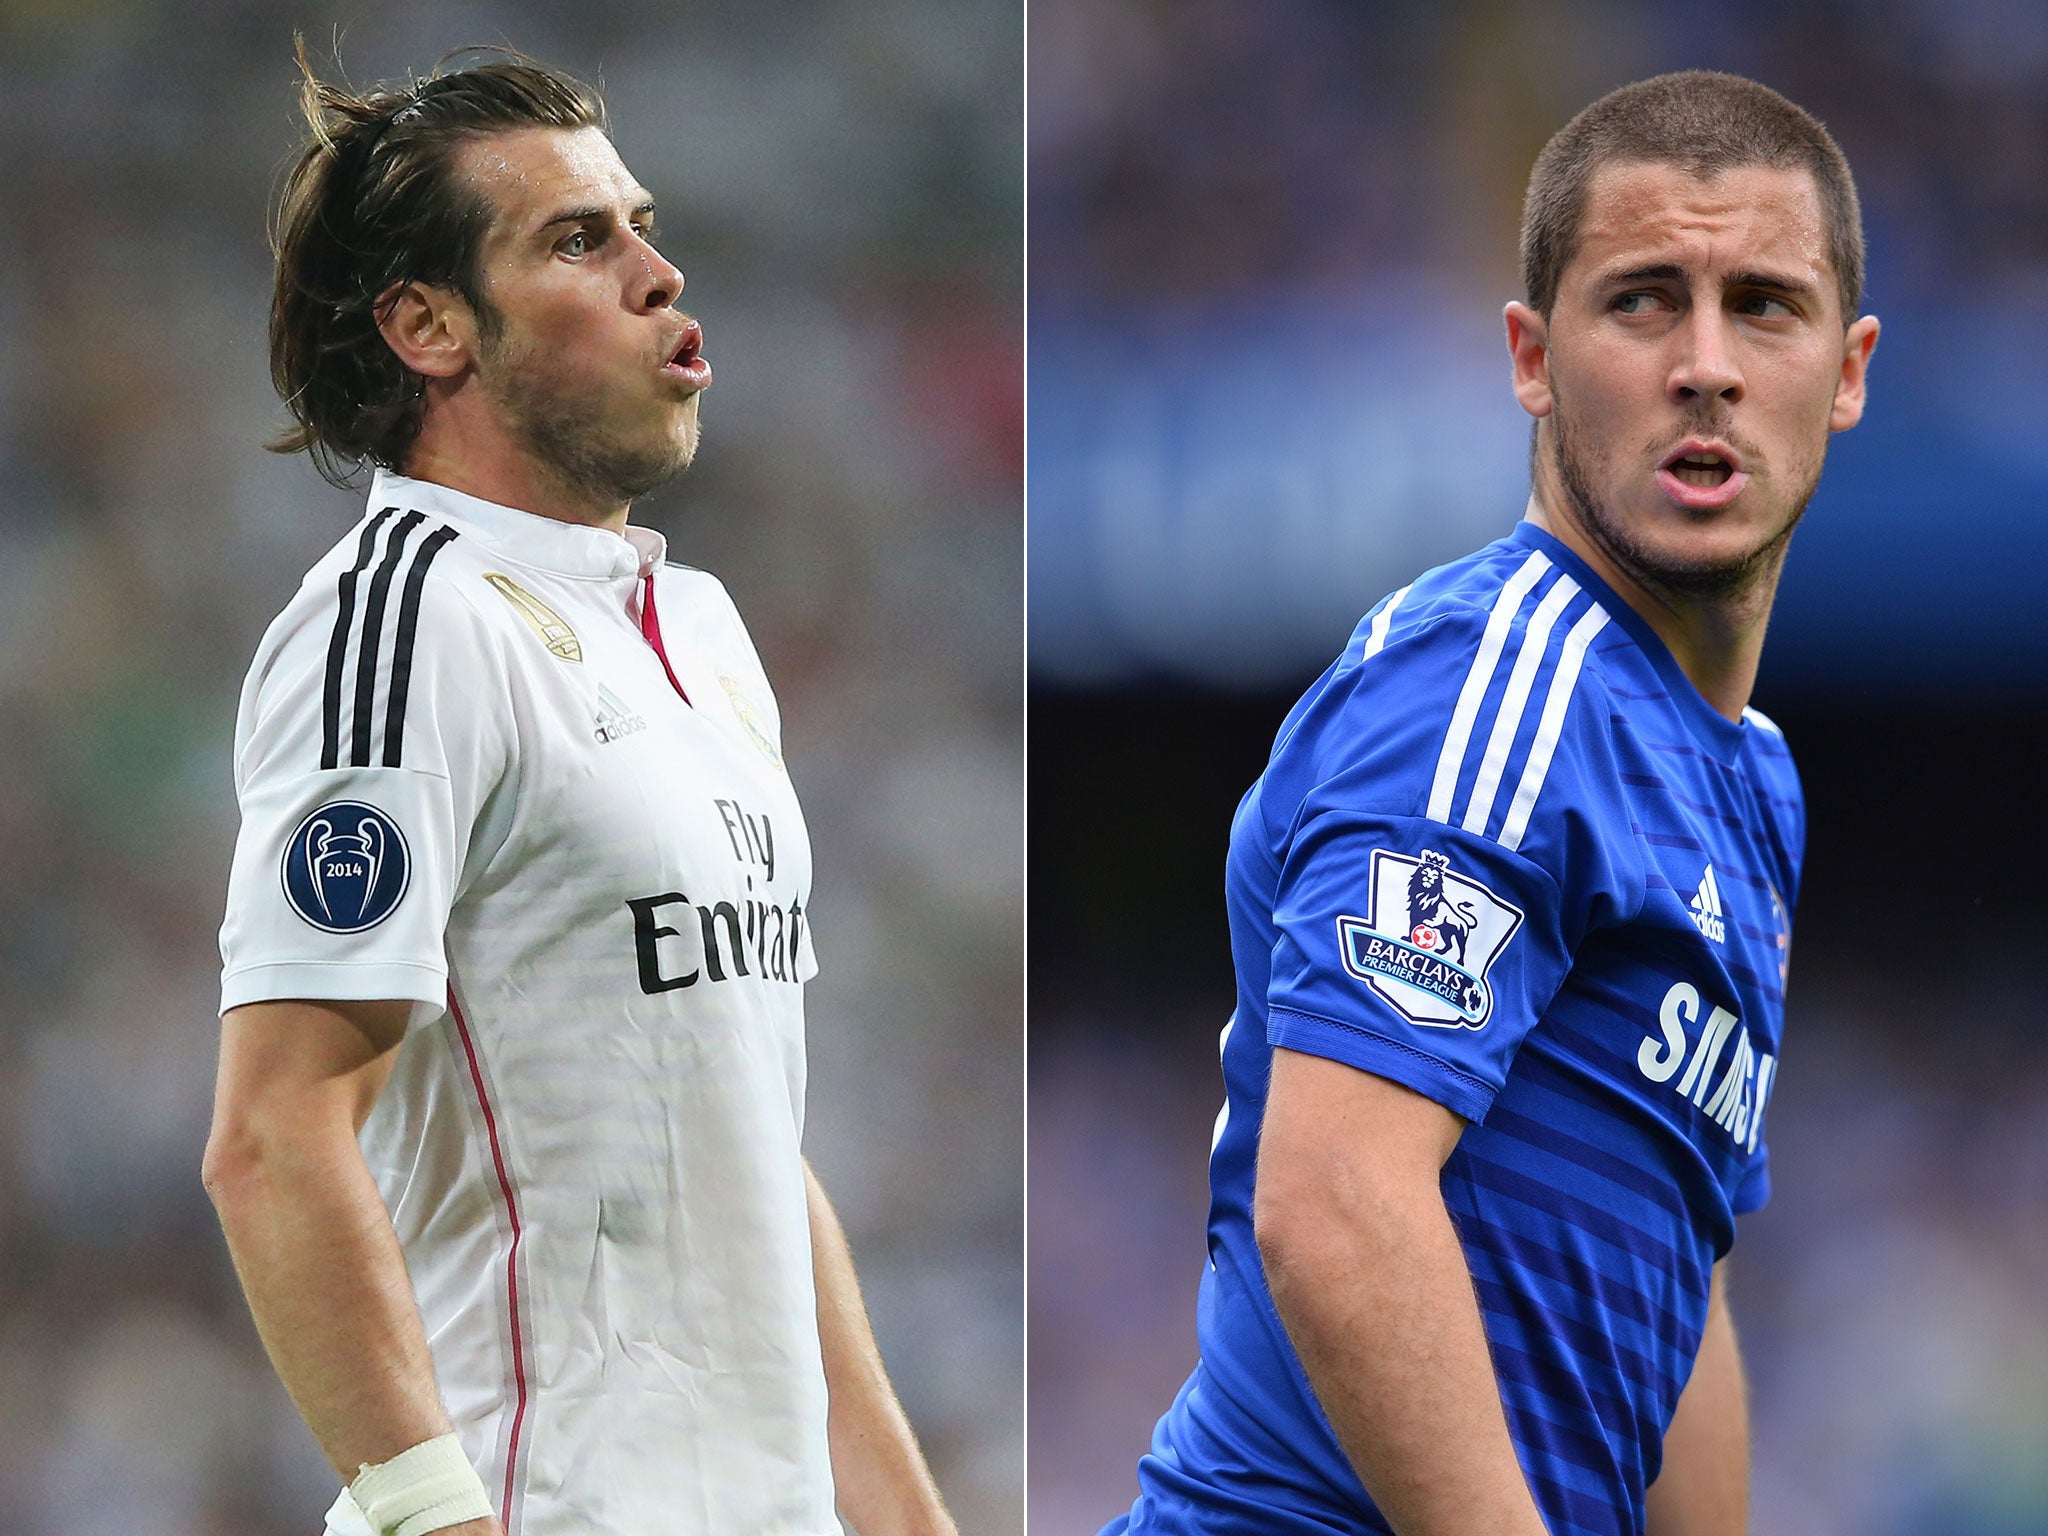 Real Madrid's Gareth Bale (left) and Chelsea's Eden Hazard